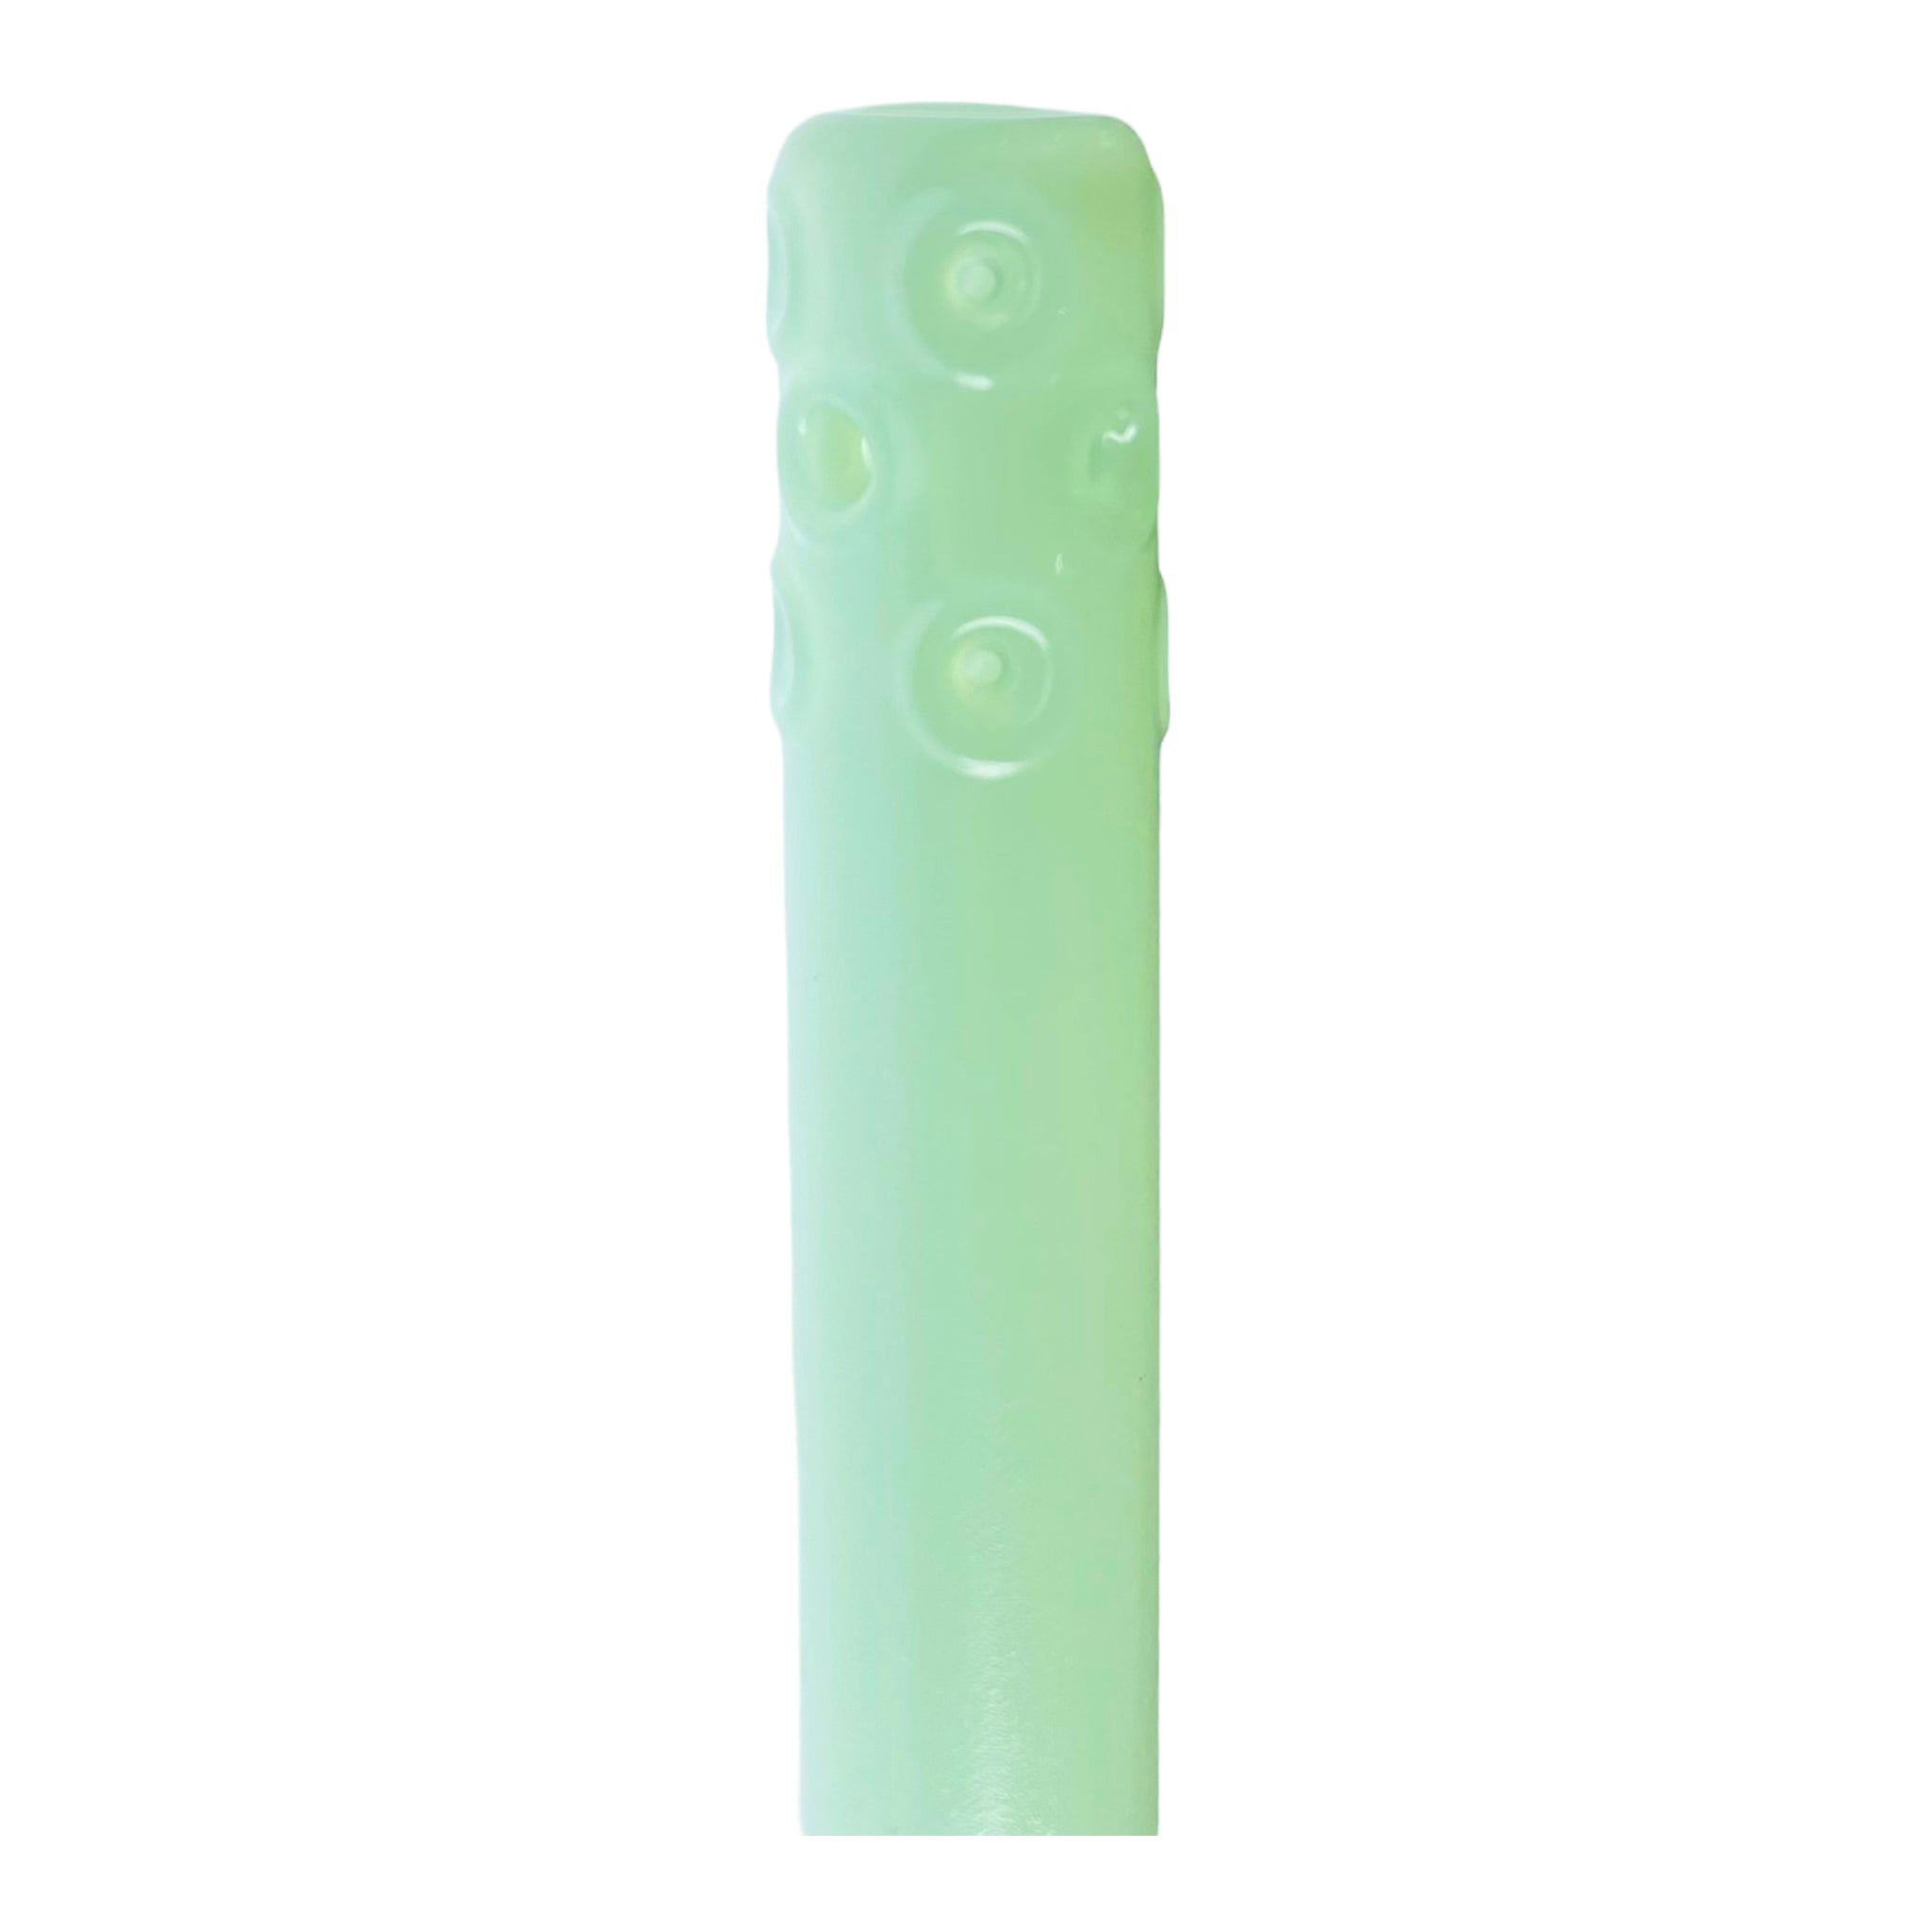 Jade Green 5 Inch 18mm - 14mm Downstem For Glass Bong